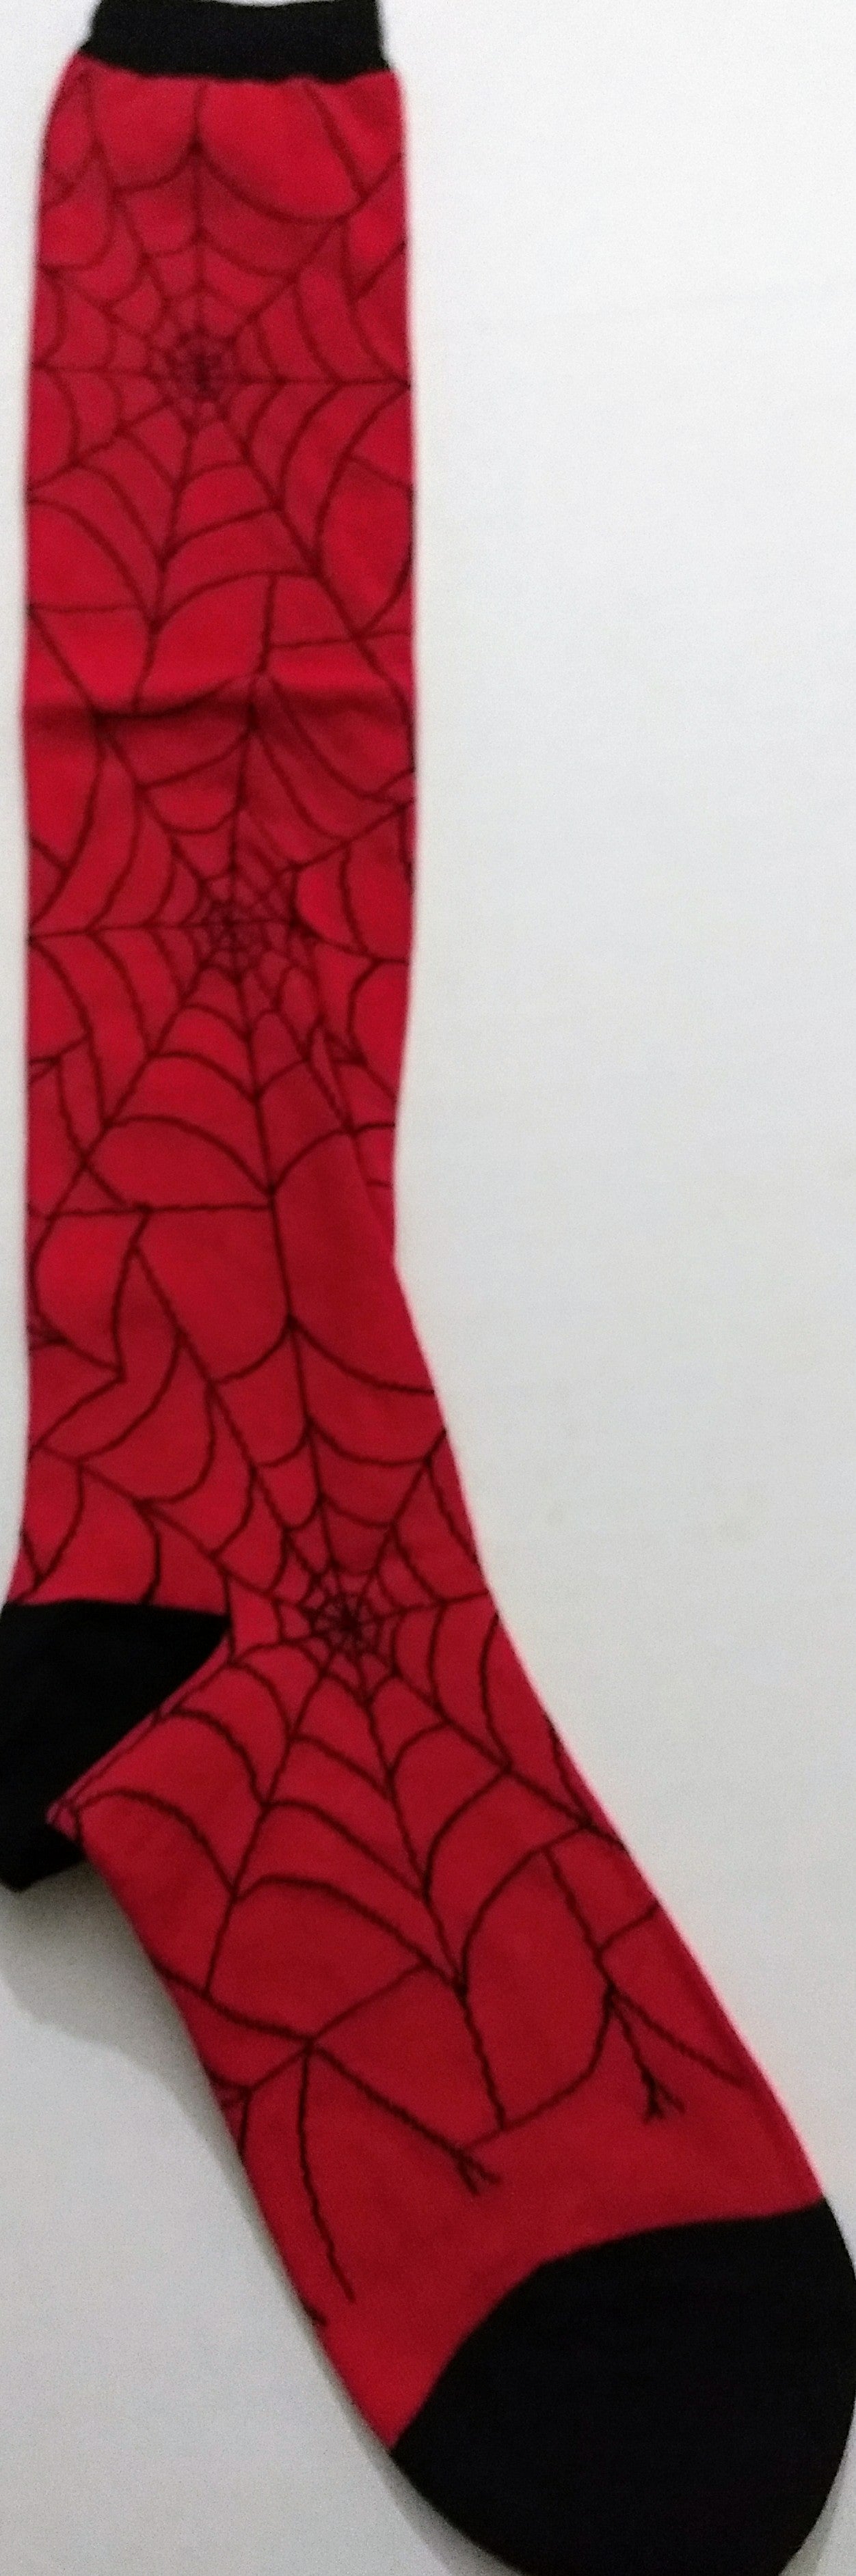 Spiderweb SockSmith Womens Knee-high Socks